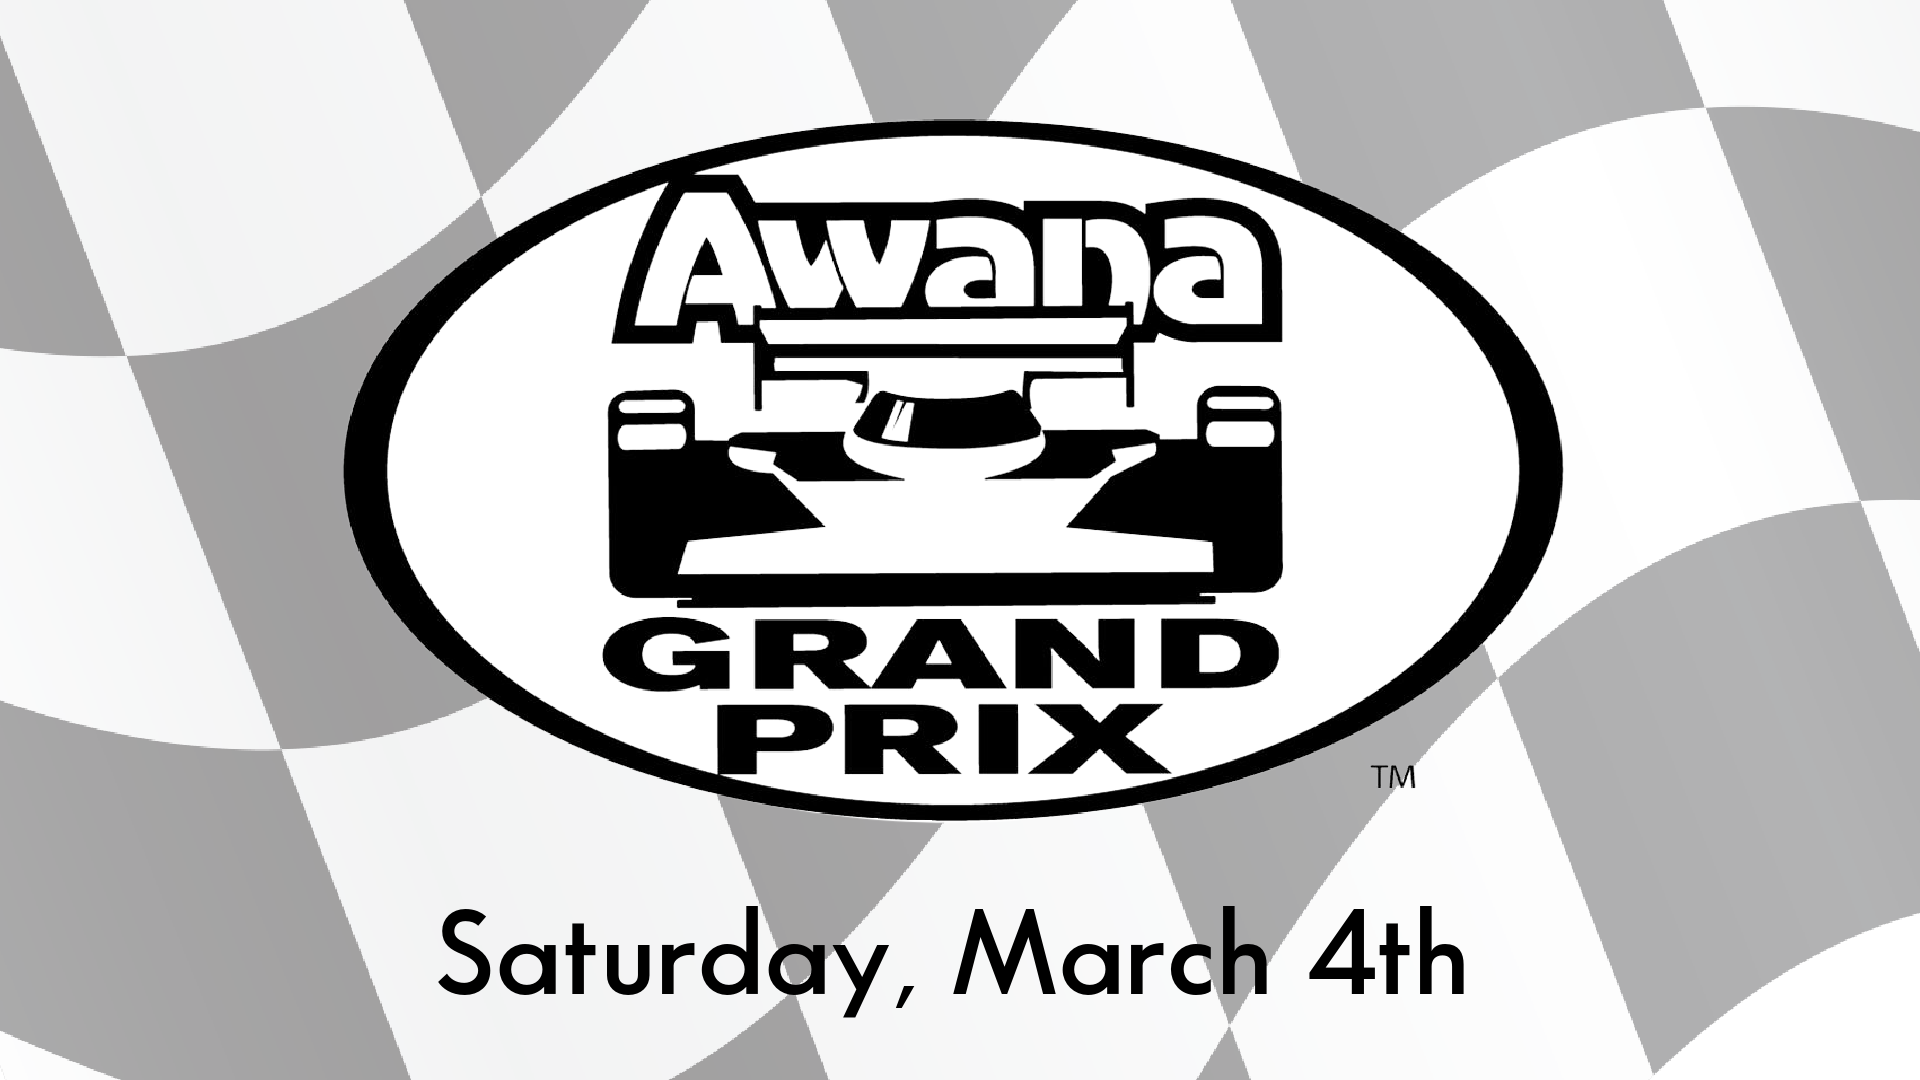 Awana Grand Prix image